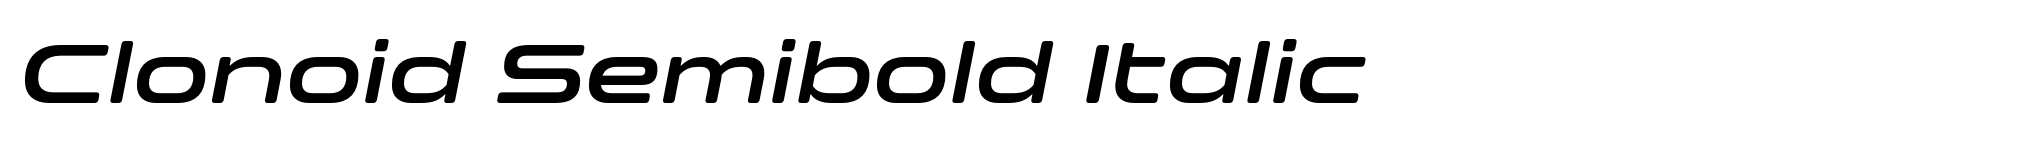 Clonoid Semibold Italic image